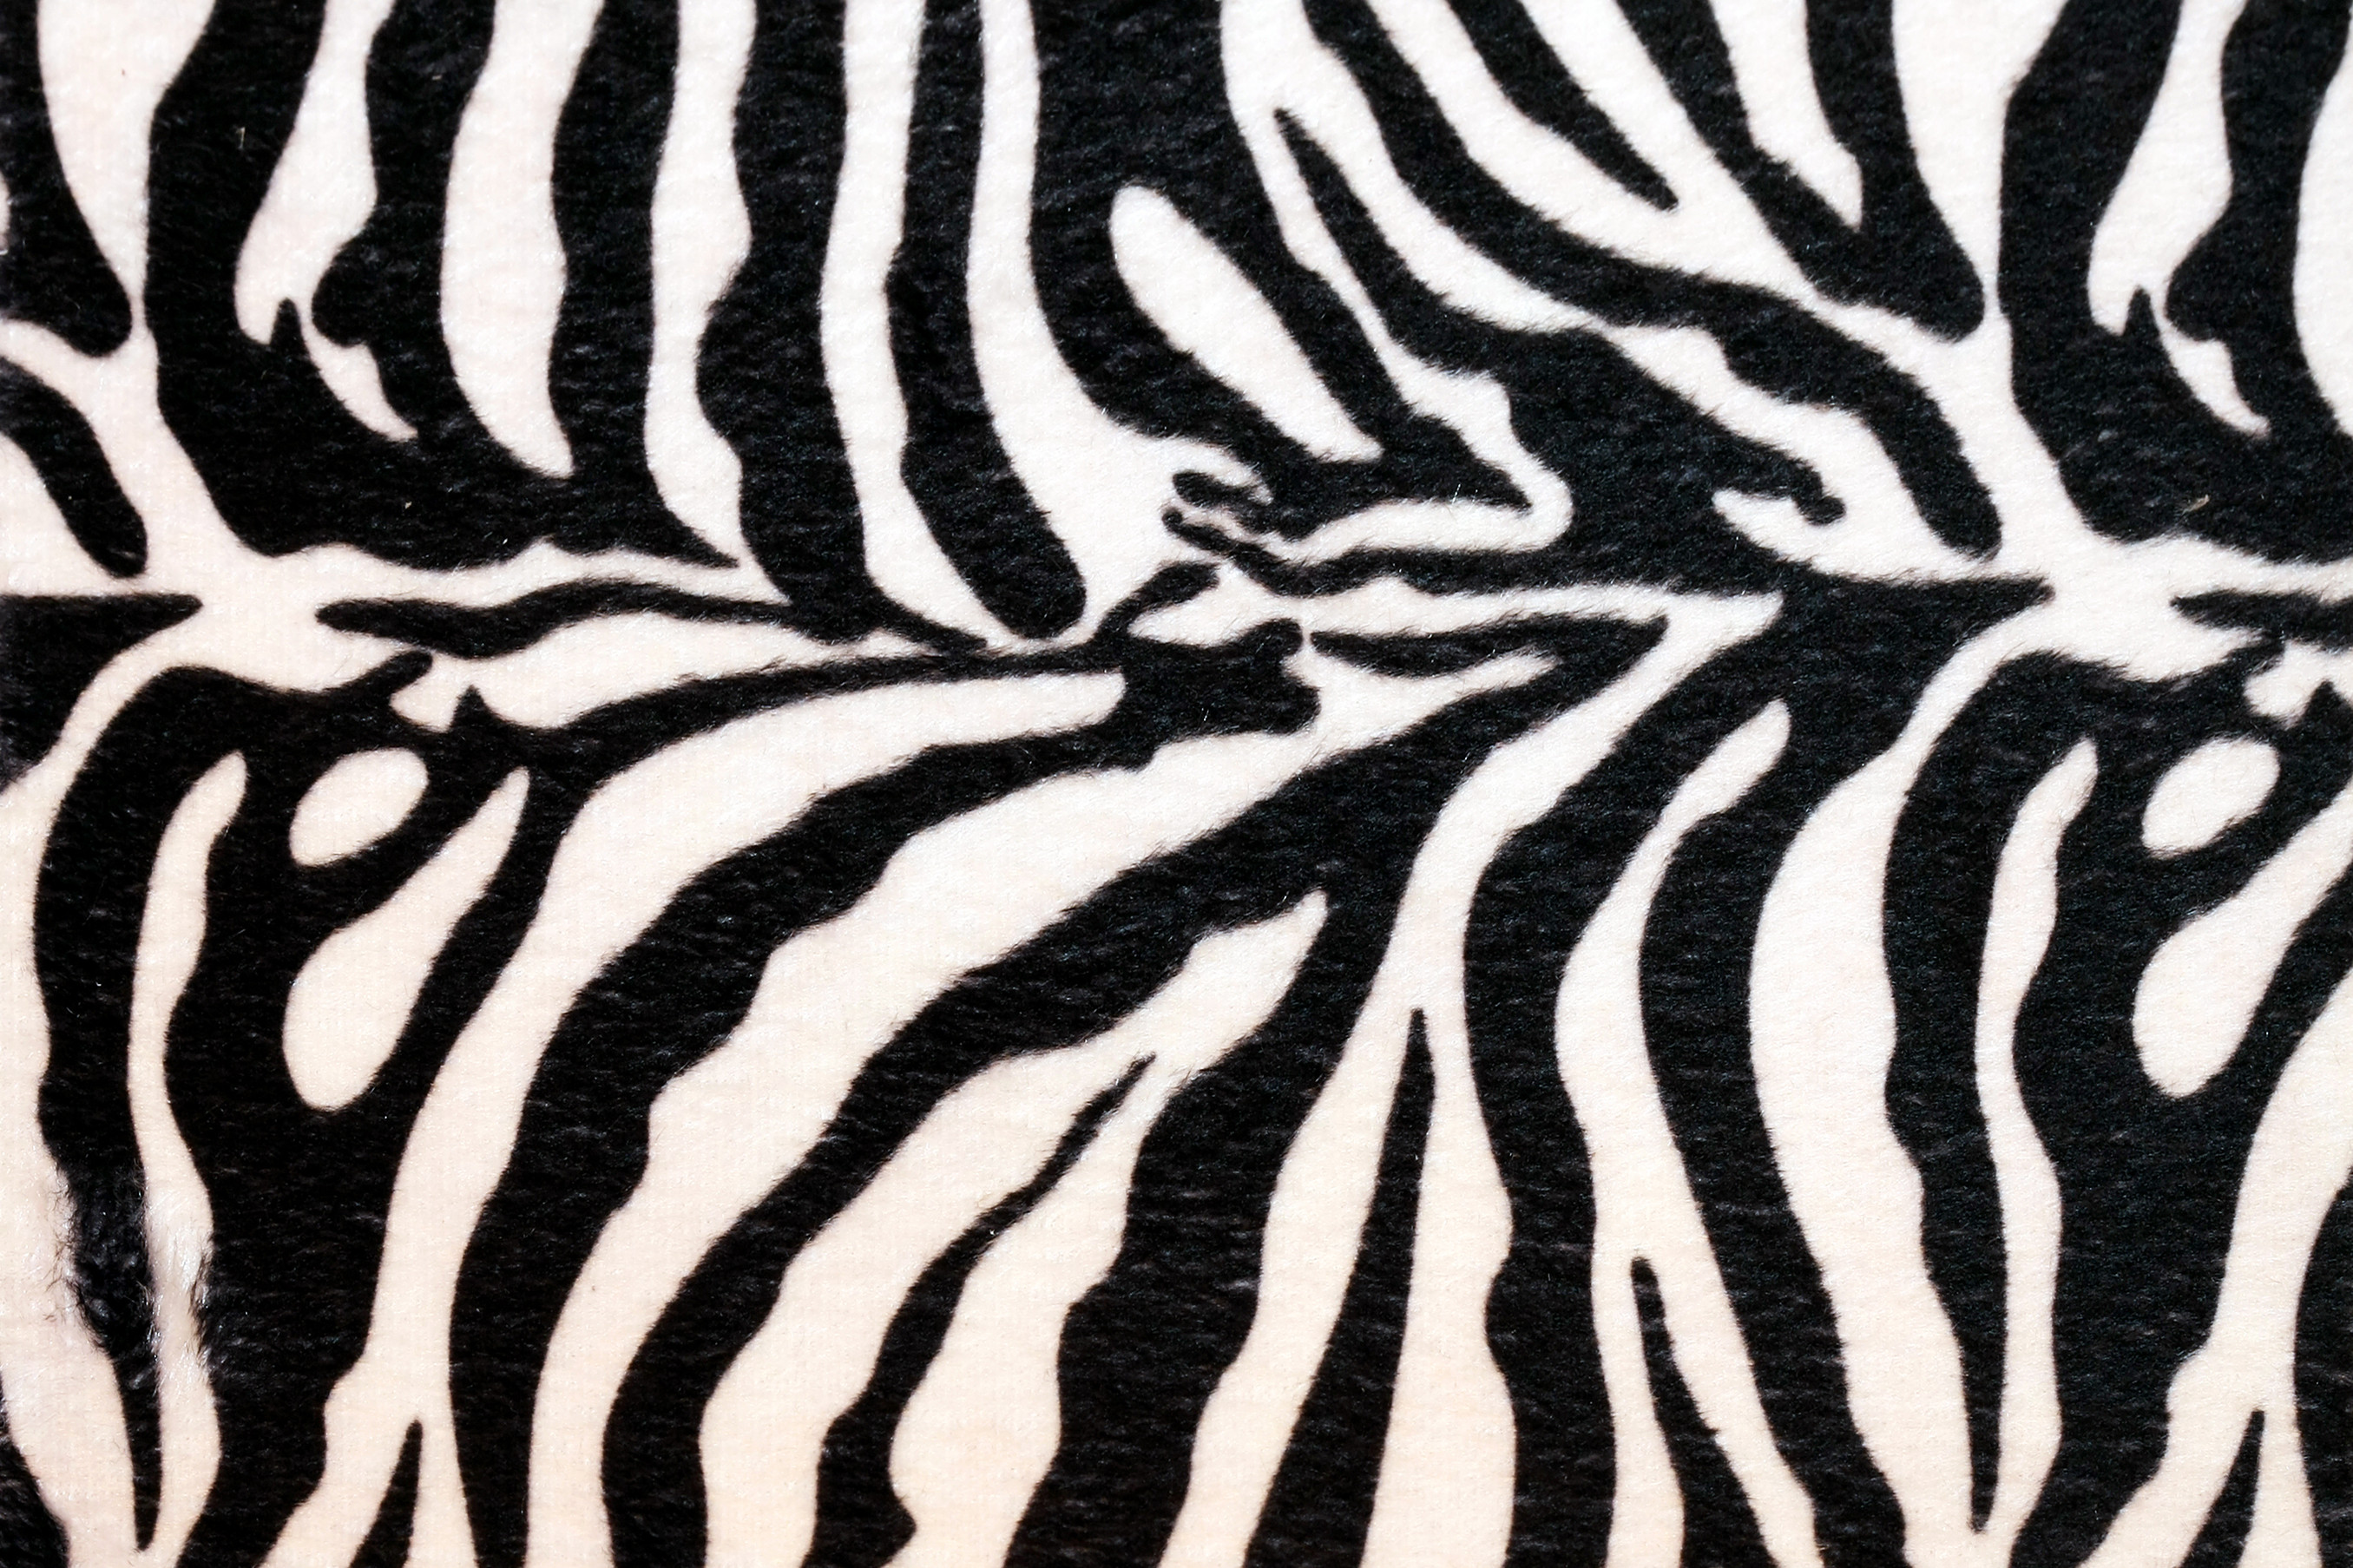 Group of: Zebra pattern background | We Heart It